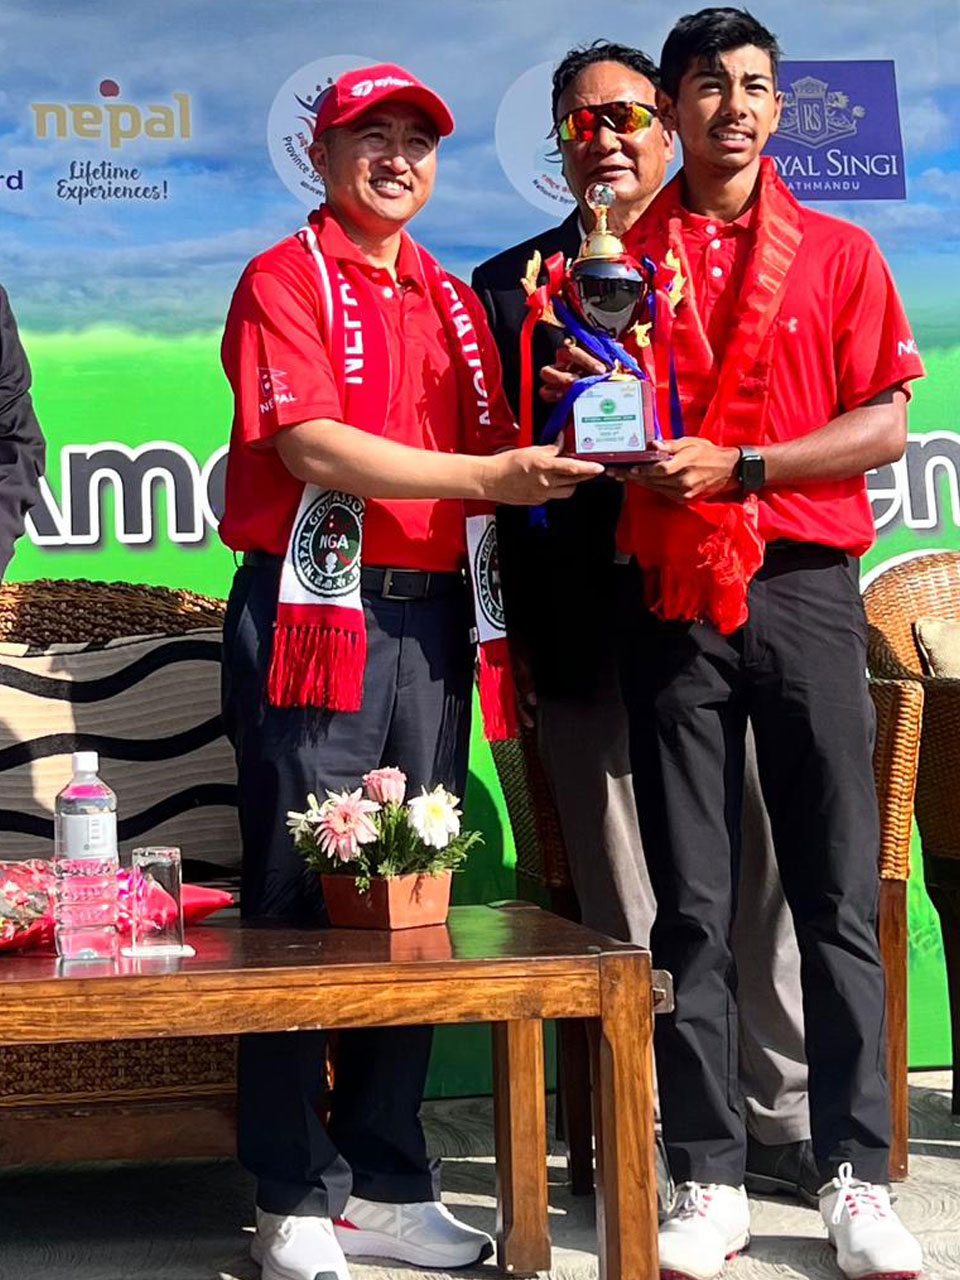 Sabhav Acharya finishes 3rd at the Nepal Amateur Championship 2023